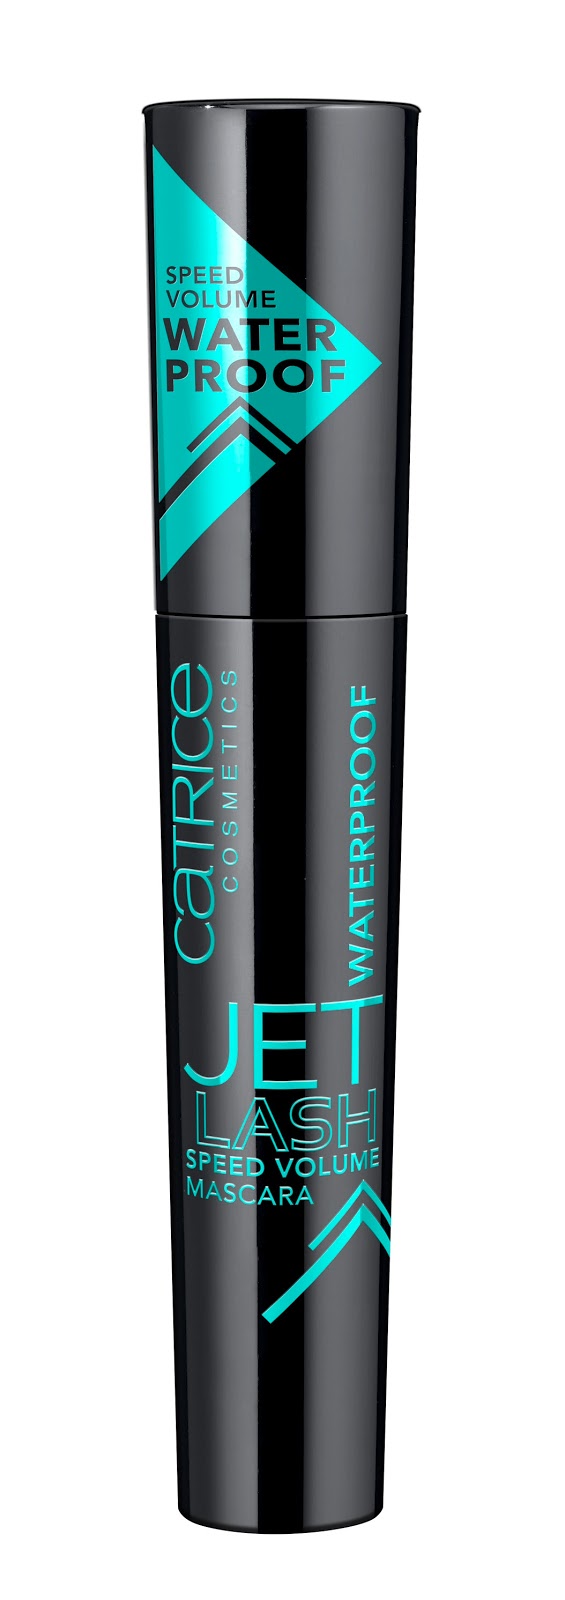 Catrice - Jet Lash – Speed Volume Mascara Ultra Black and Waterproof 